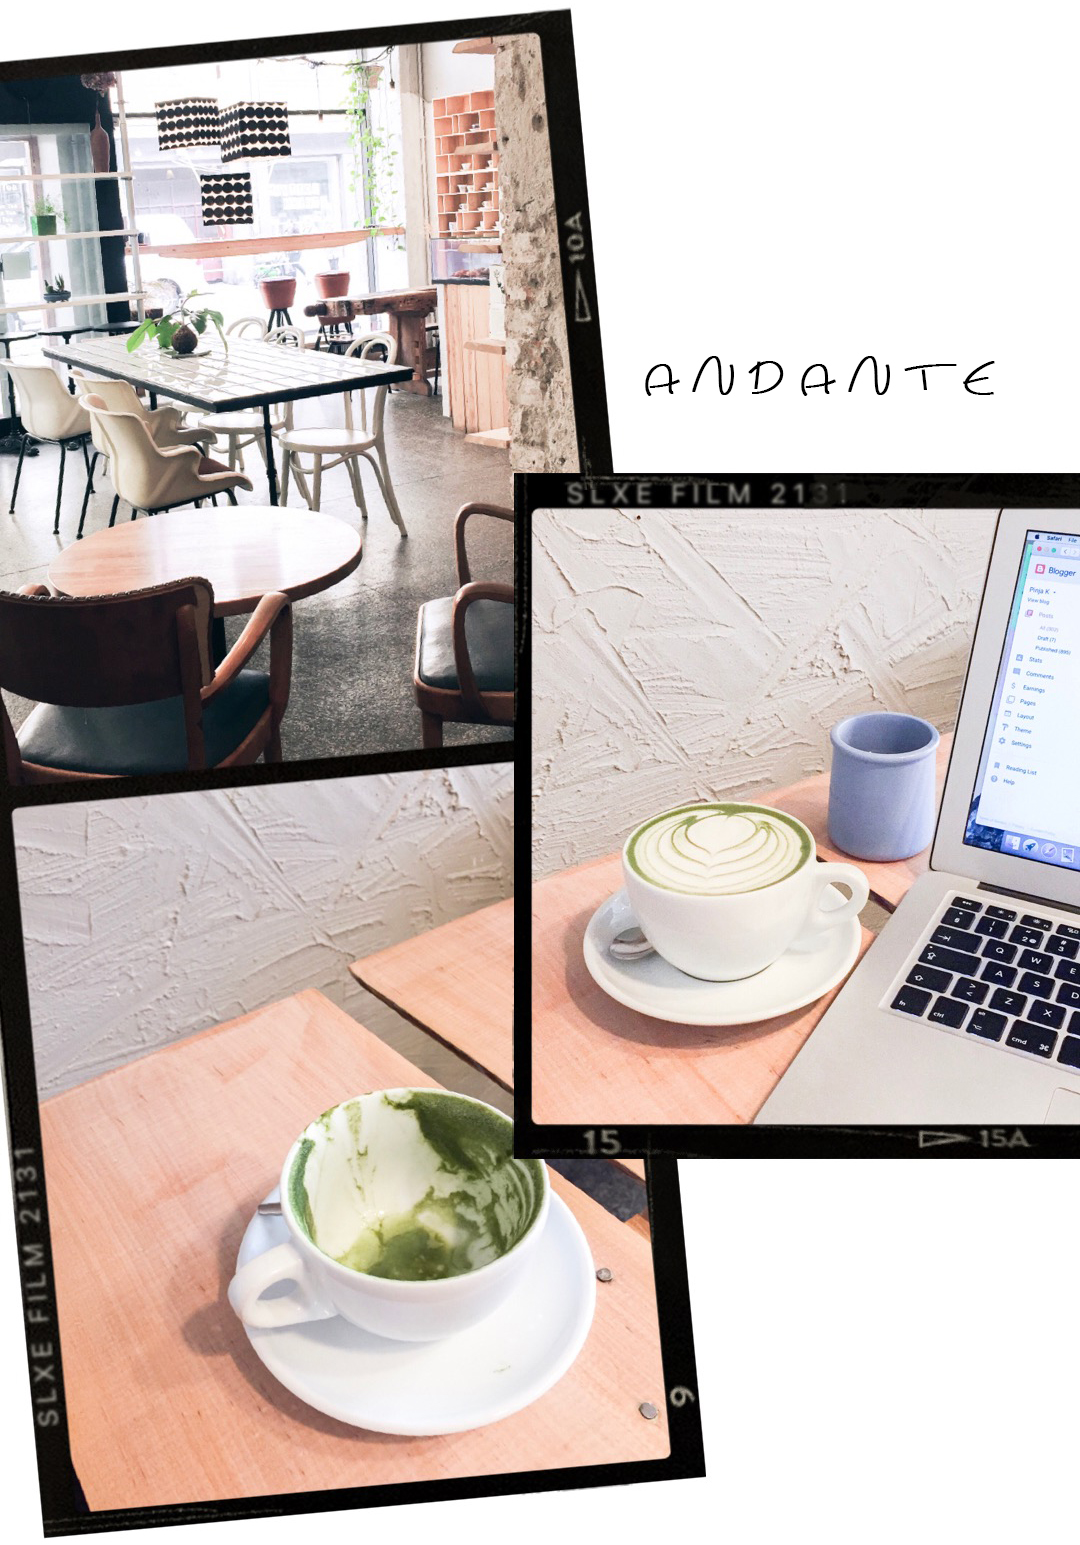 Coffee shop tips Helsinki / Kahvilavinkit Helsinki: ANDANTE + oat matcha latte